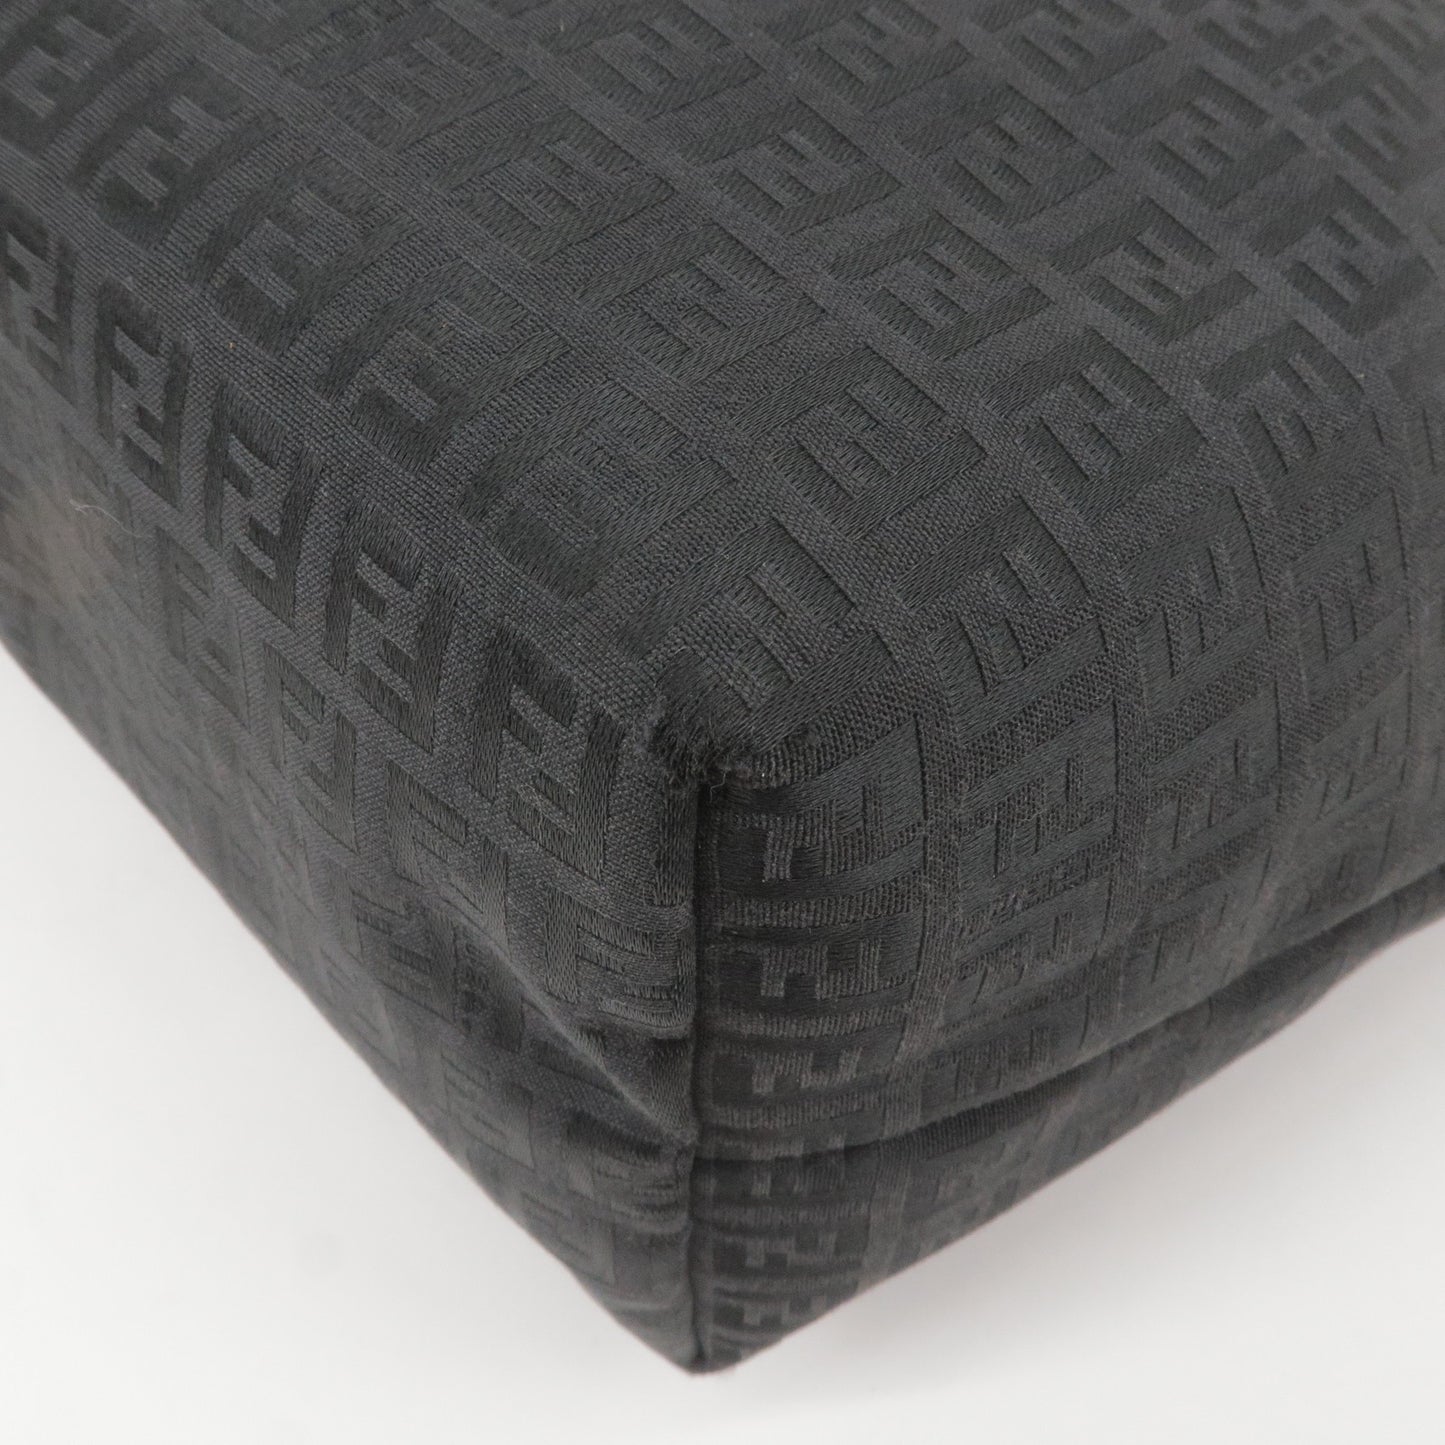 FENDI Zucchino Canvas Leather Tote Bag Hand Bag Black 8BH005